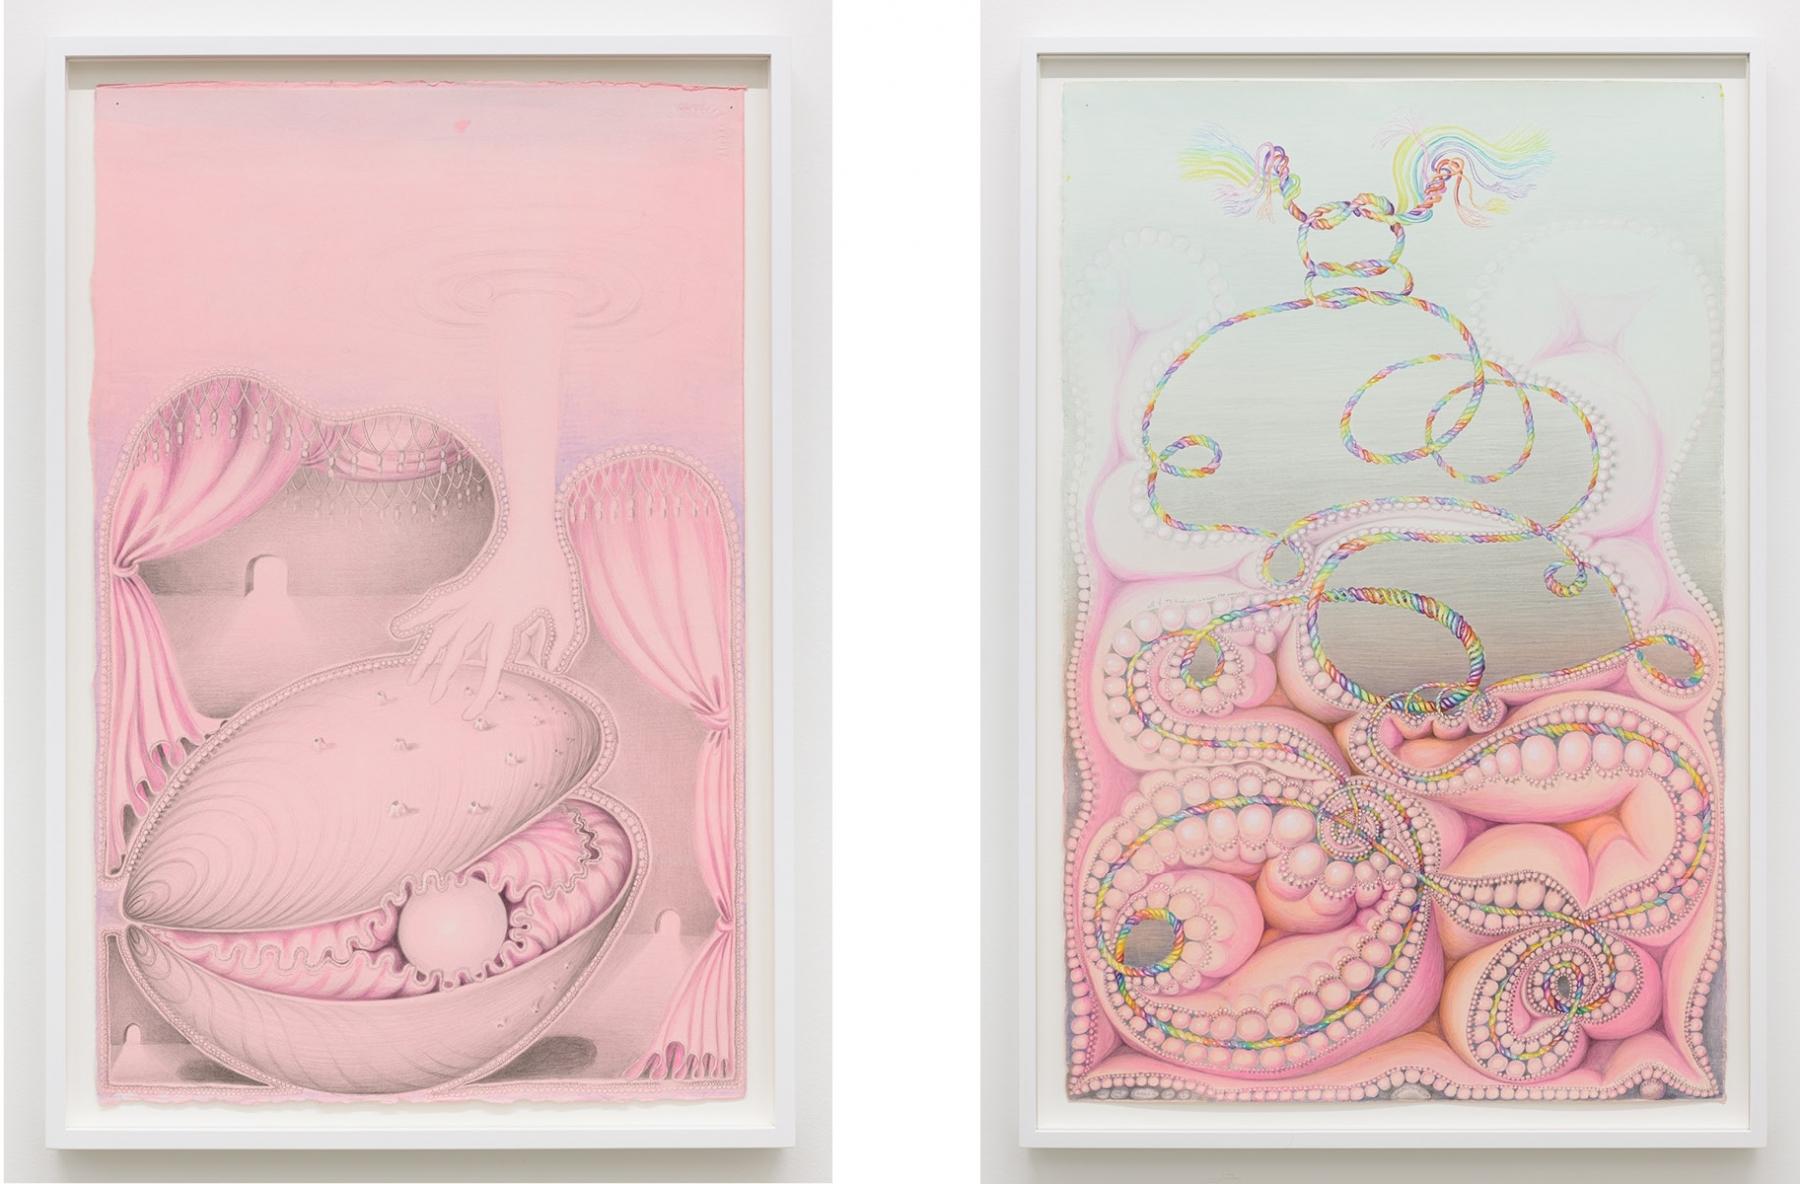 Left: Kinke Kooi,&amp;nbsp;In Touch, 2011;&amp;nbsp;acrylic, gouache, colored pencil on paper,&amp;nbsp;26h x 16 1/2w in/&amp;nbsp;66.04h x 41.91w cm

Right:&amp;nbsp;Kinke Kooi,&amp;nbsp;Bonding, 2019;&amp;nbsp;acrylic, gouache, fineliner on paper,&amp;nbsp;40 9/16h x 26w in/&amp;nbsp;103.03h x 66.04w cm

Inquire